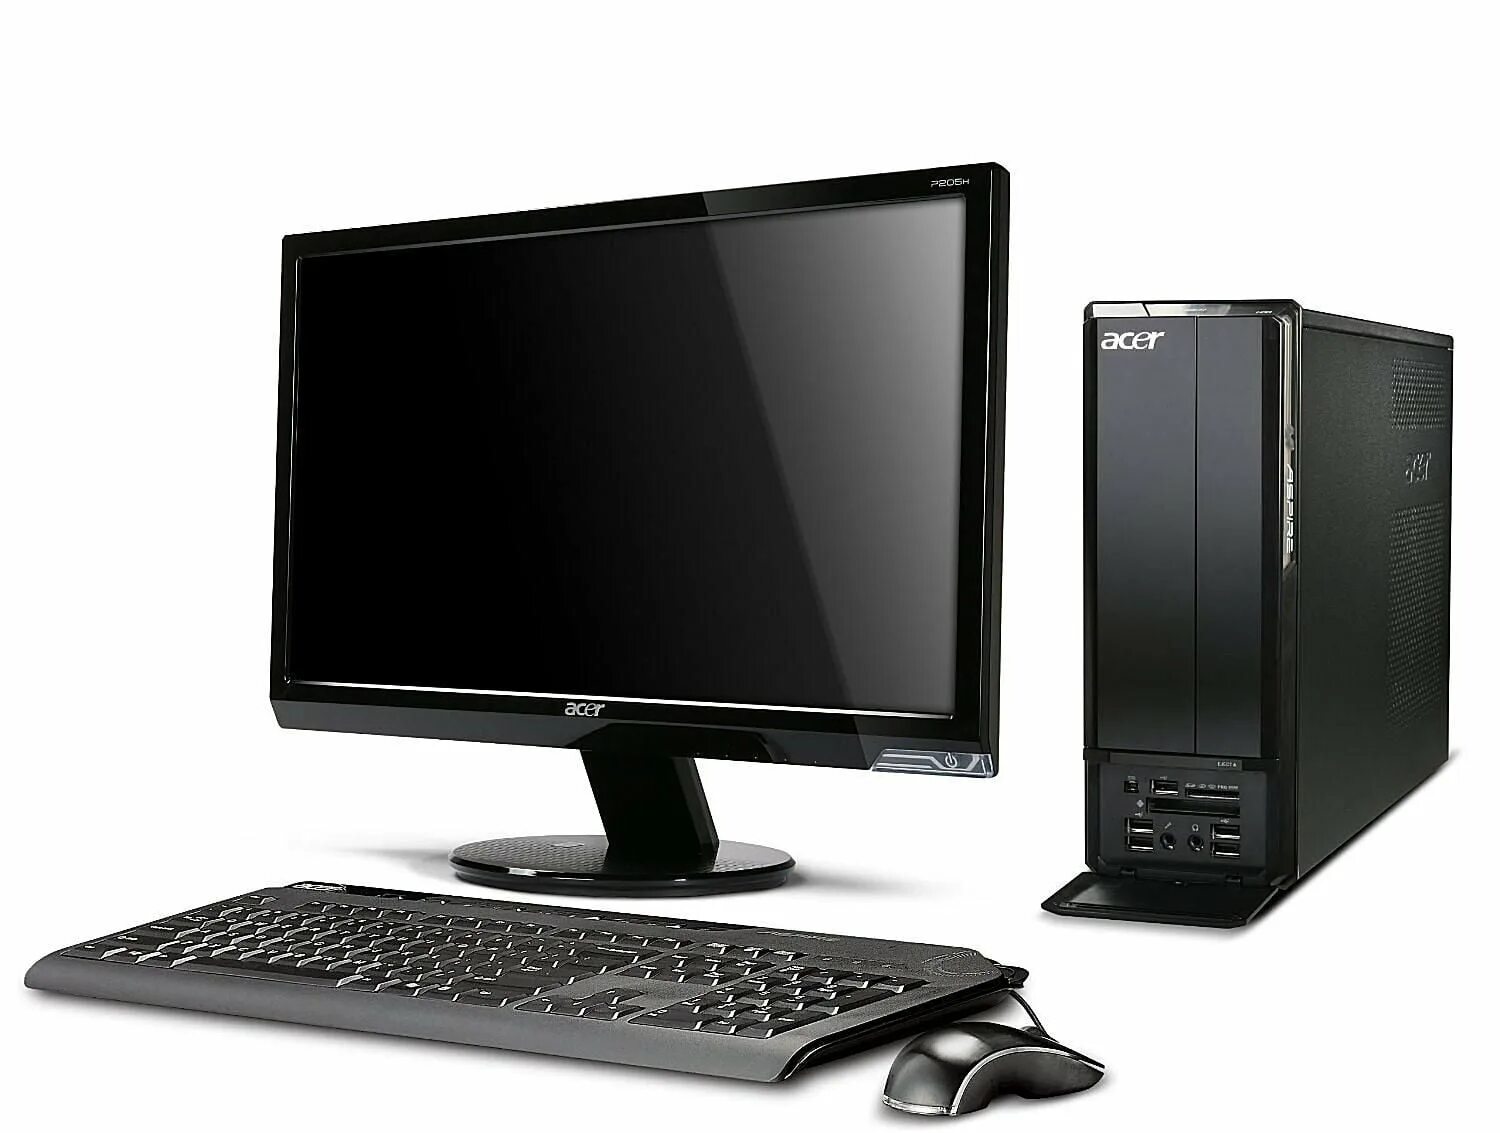 Acer Aspire x3300. Acer Aspire 3300. Компьютер Асер без системного блока. Acer Aspire x3300 small form Factor.